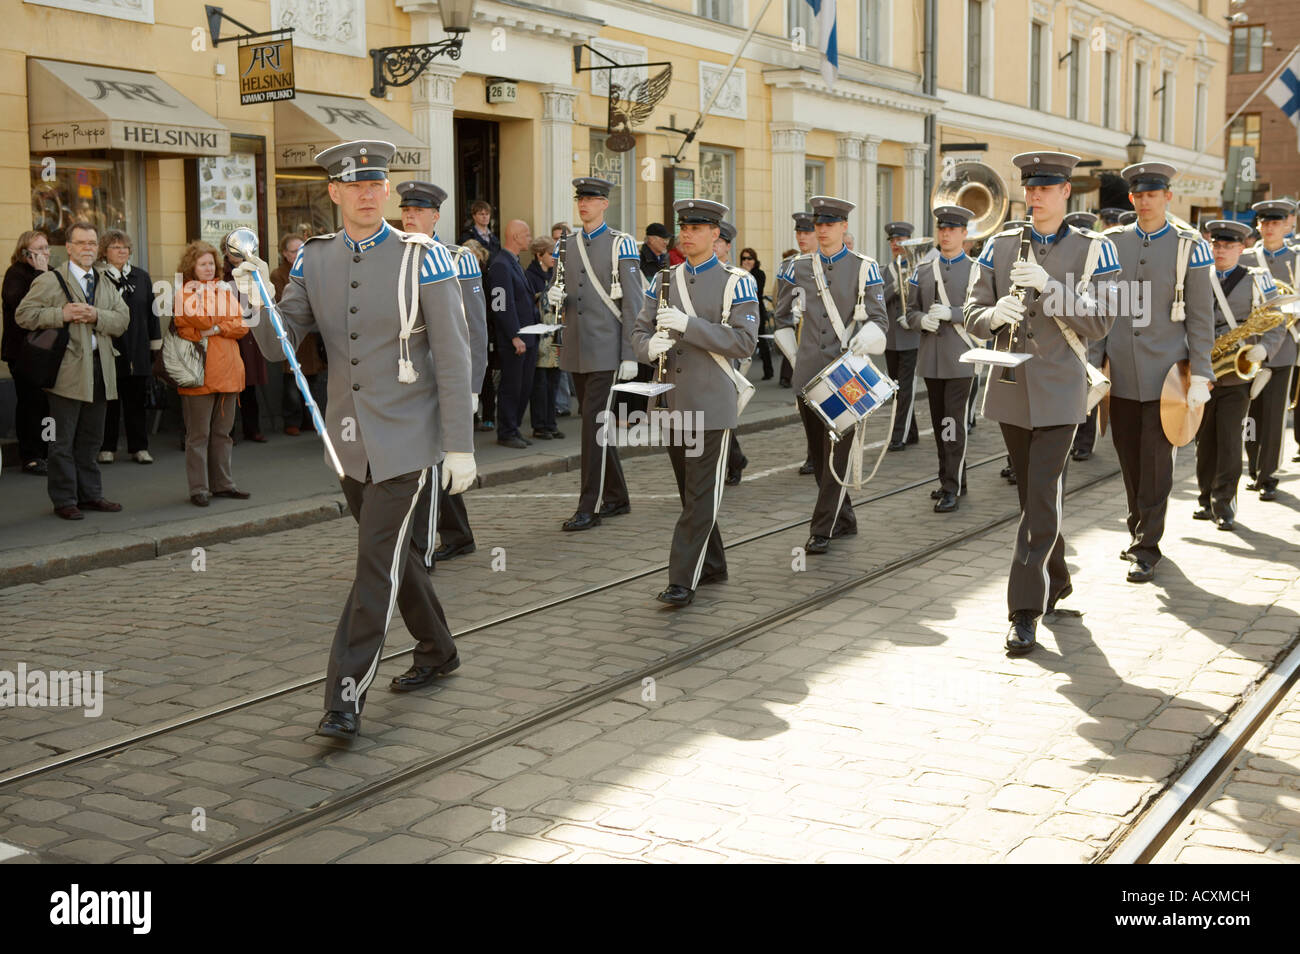 Military music parade during the Helsinki Party, Senate Square, Helsinki, Finland Stock Photo